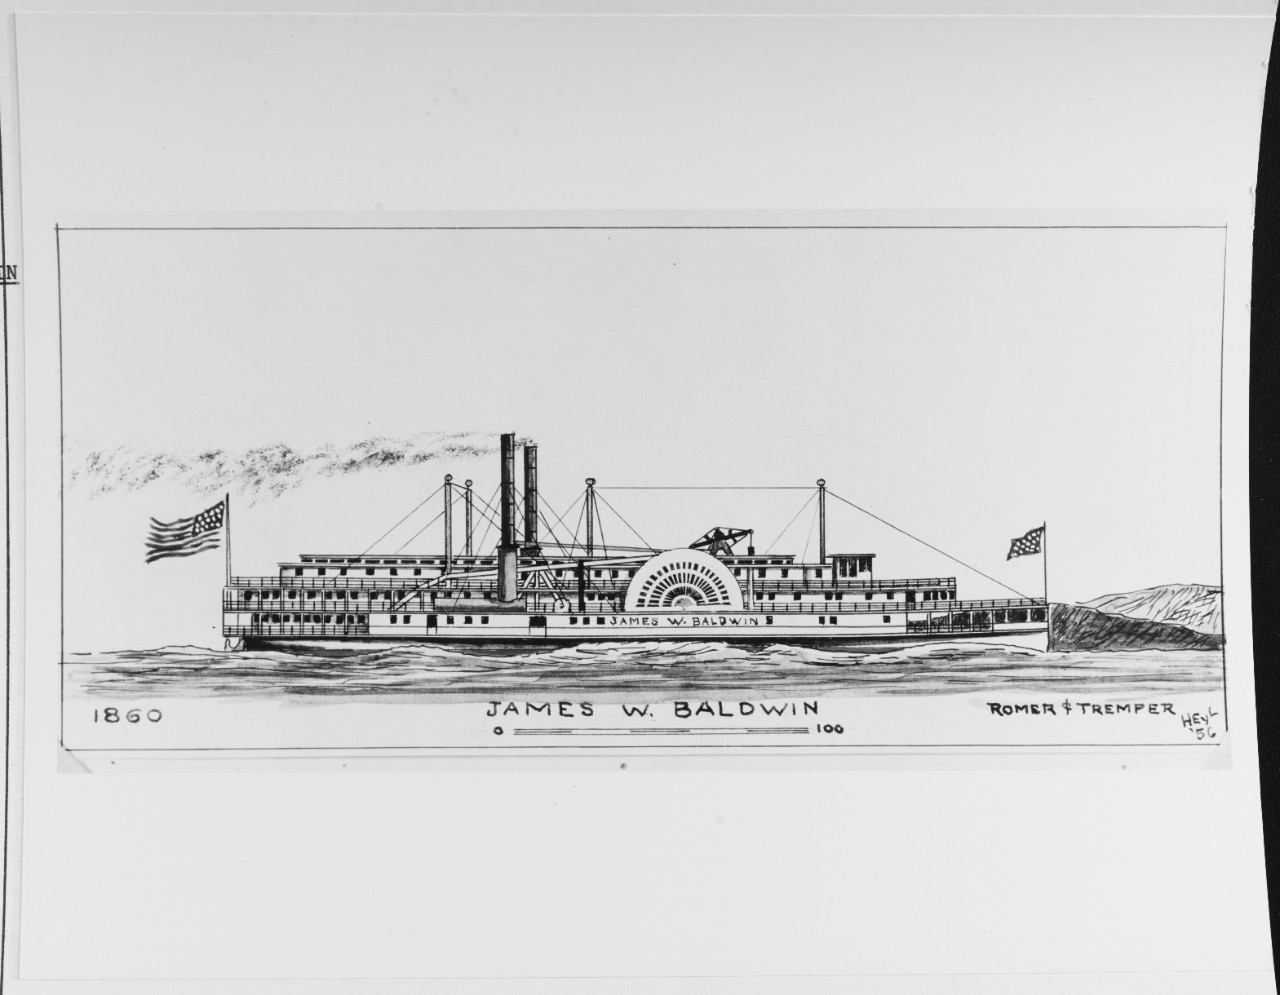 JAMES W. BALDWIN (American merchant steamer, 1860-1911)